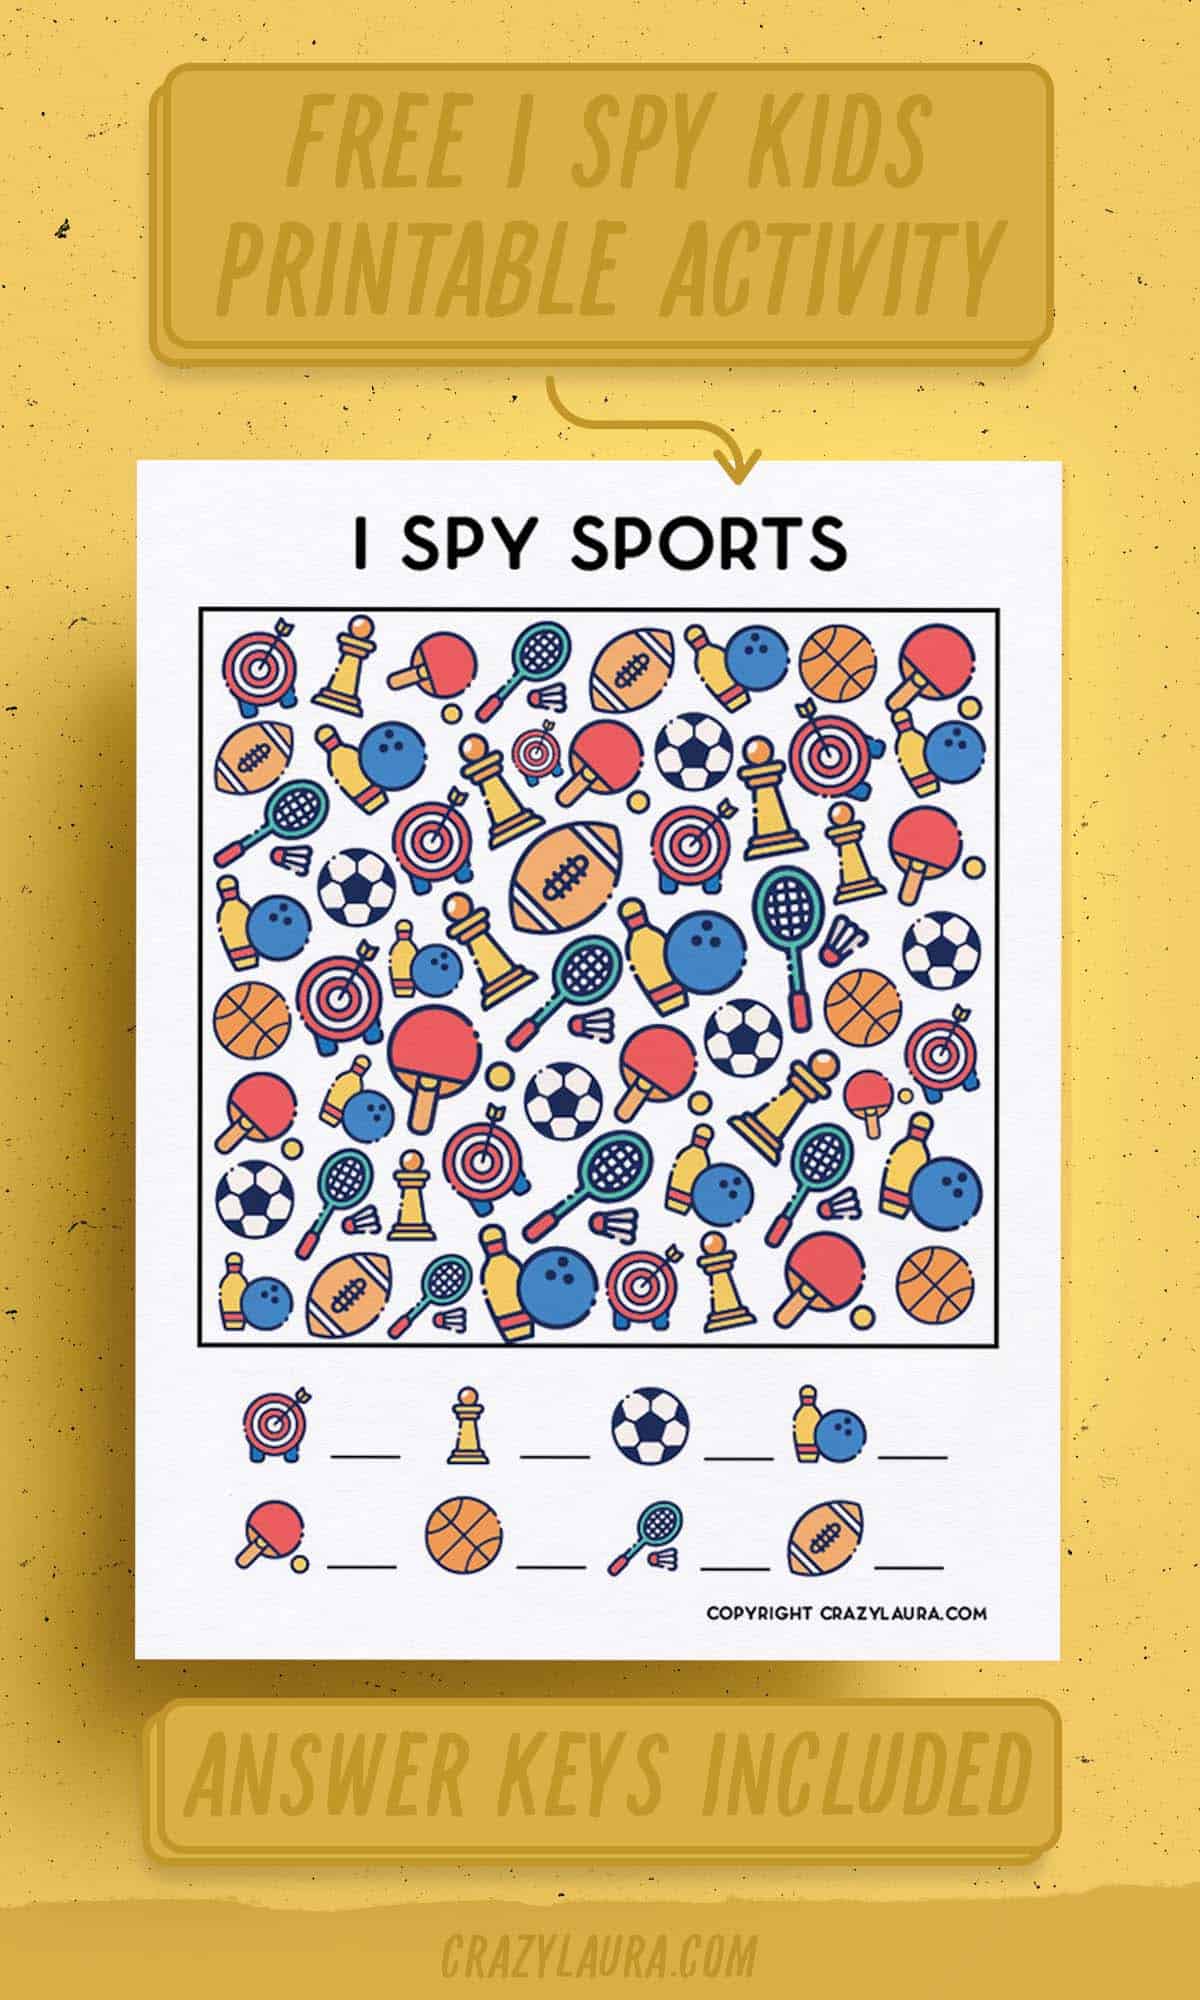 i spy sports activity sheets for free